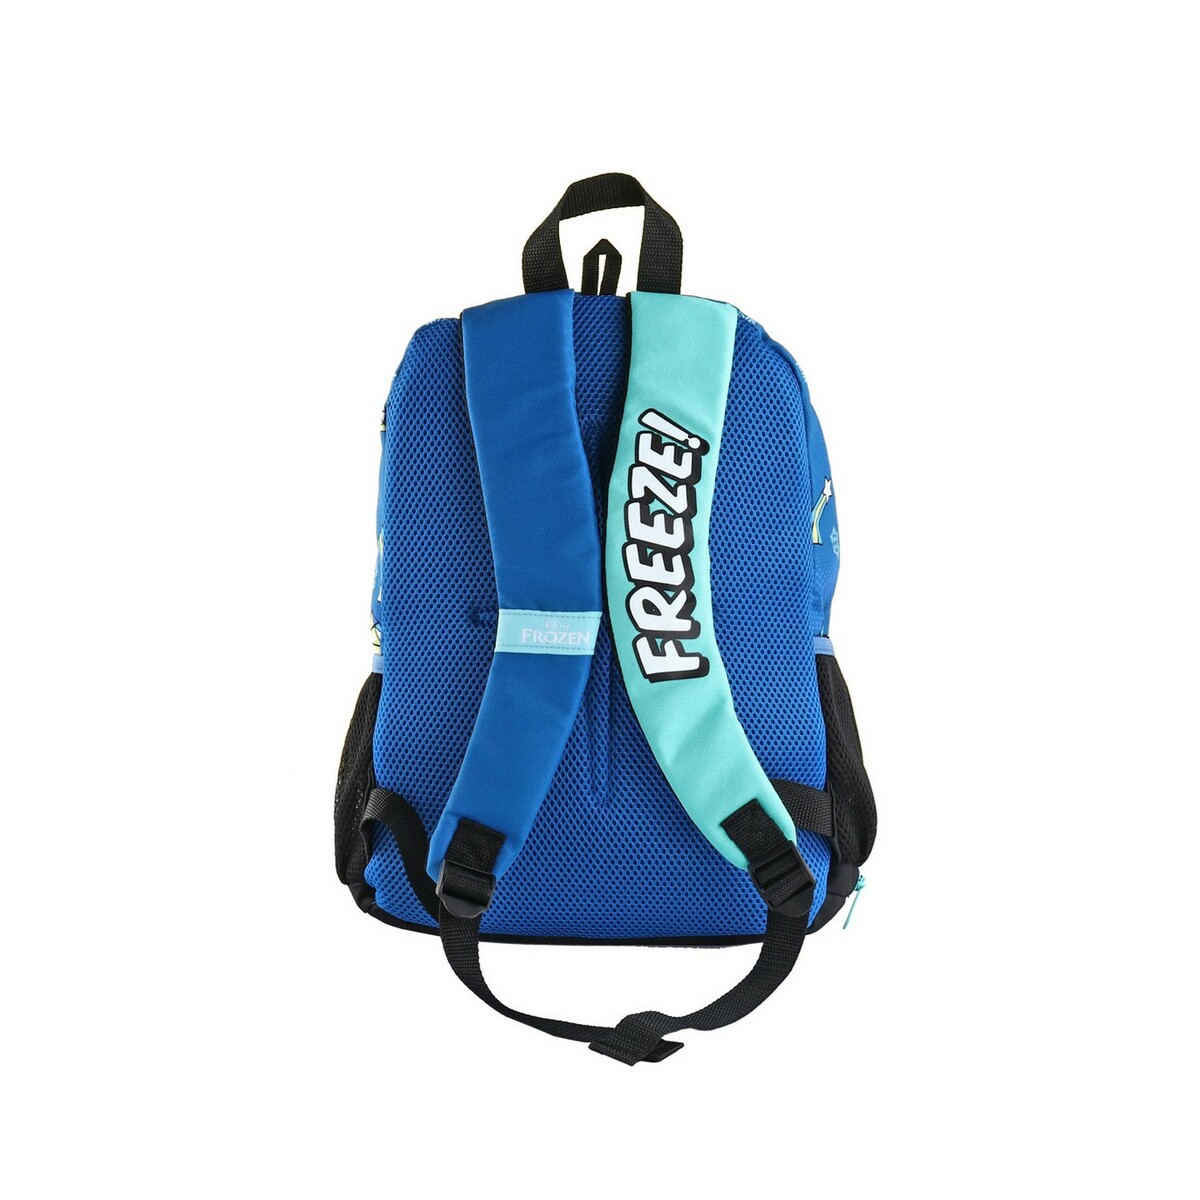 Frozen 2 Els Backpack 16Inch-WDP1685